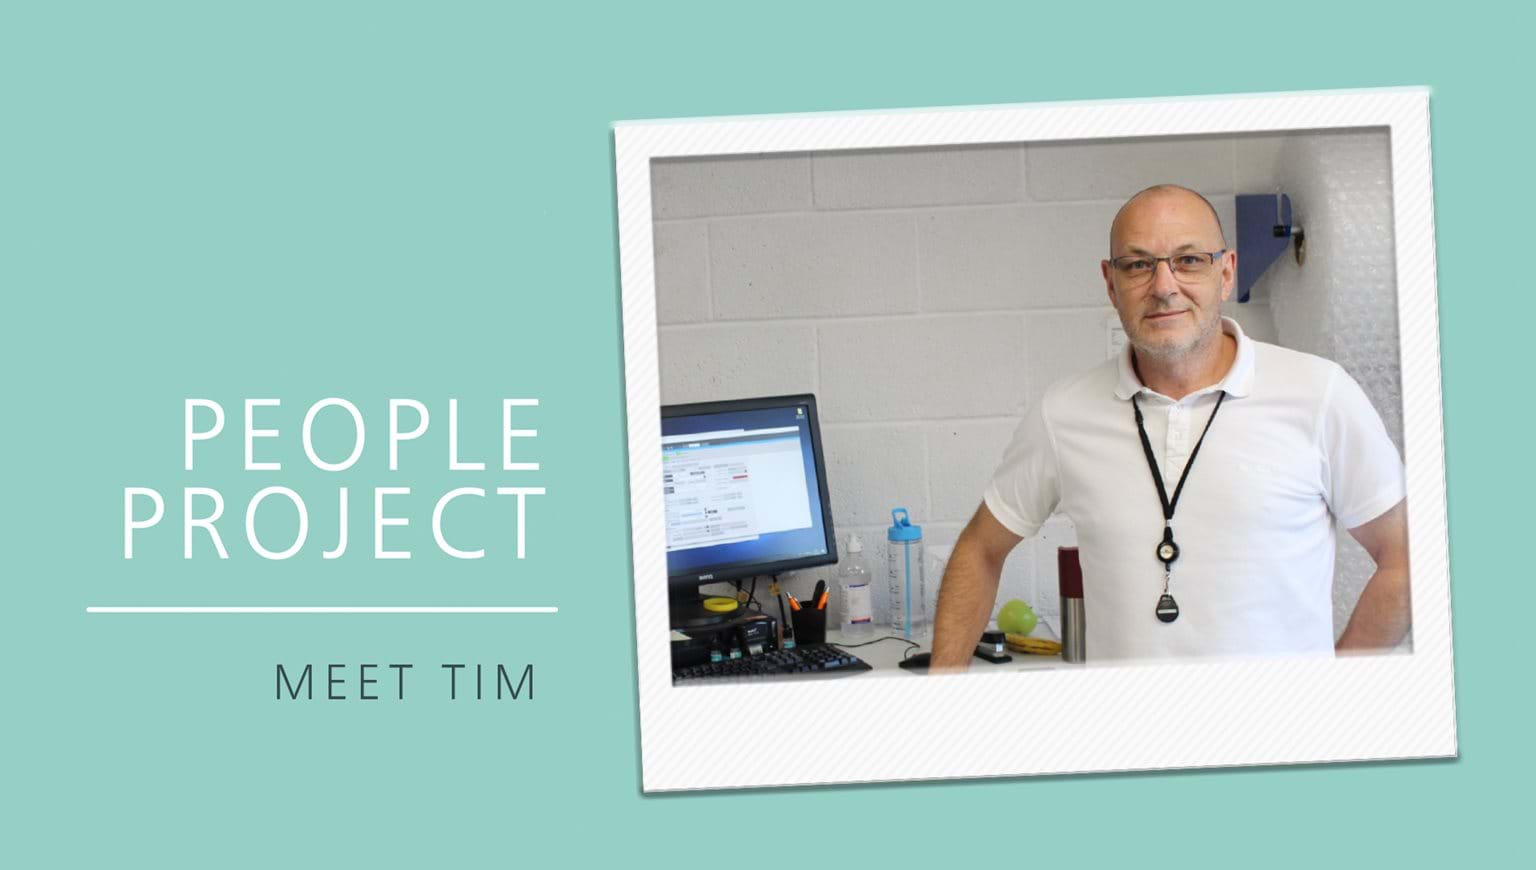 People Project - Meet Tim